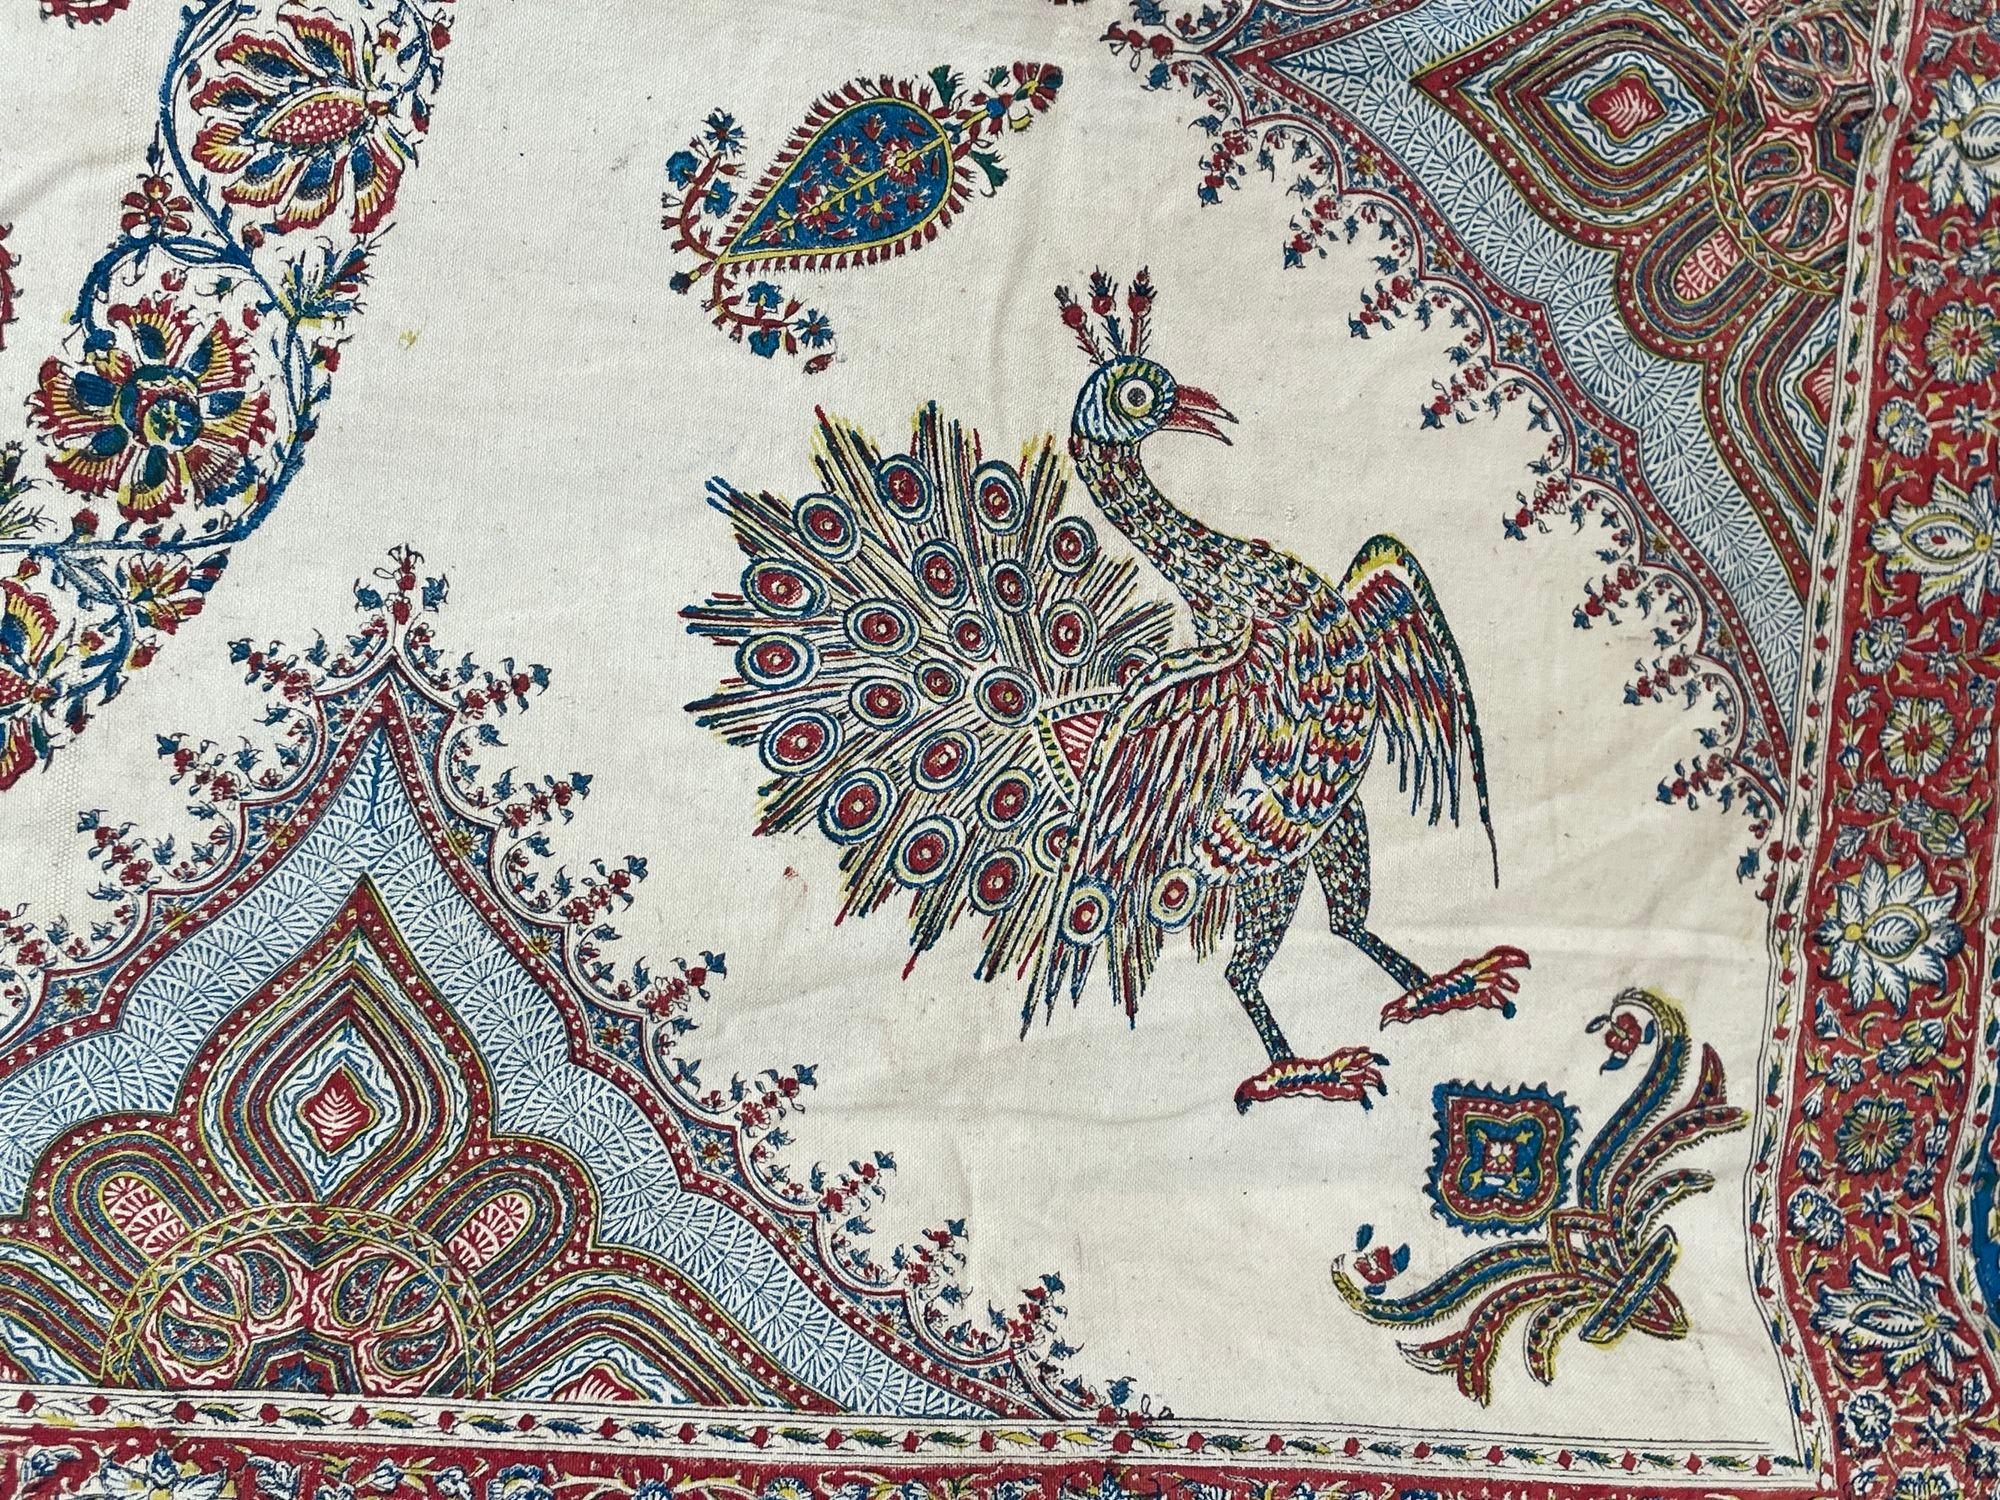 Large Isfahan Ghalamkar Persian Paisley Textile Block Printed 1950s For Sale 7